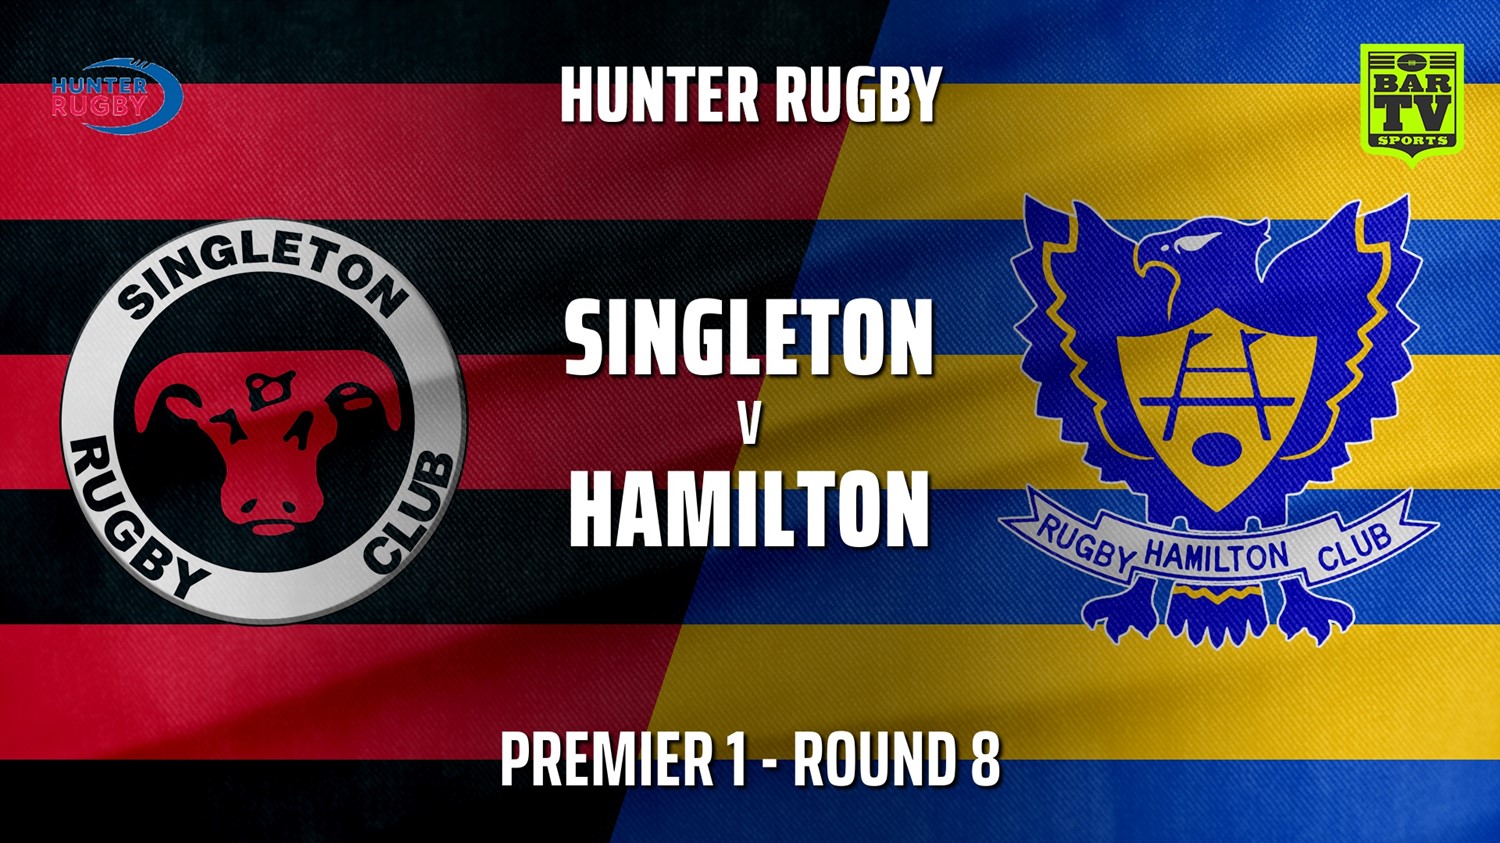 210605-HRU Round 8 - Premier 1 - Singleton Bulls v Hamilton Hawks Slate Image